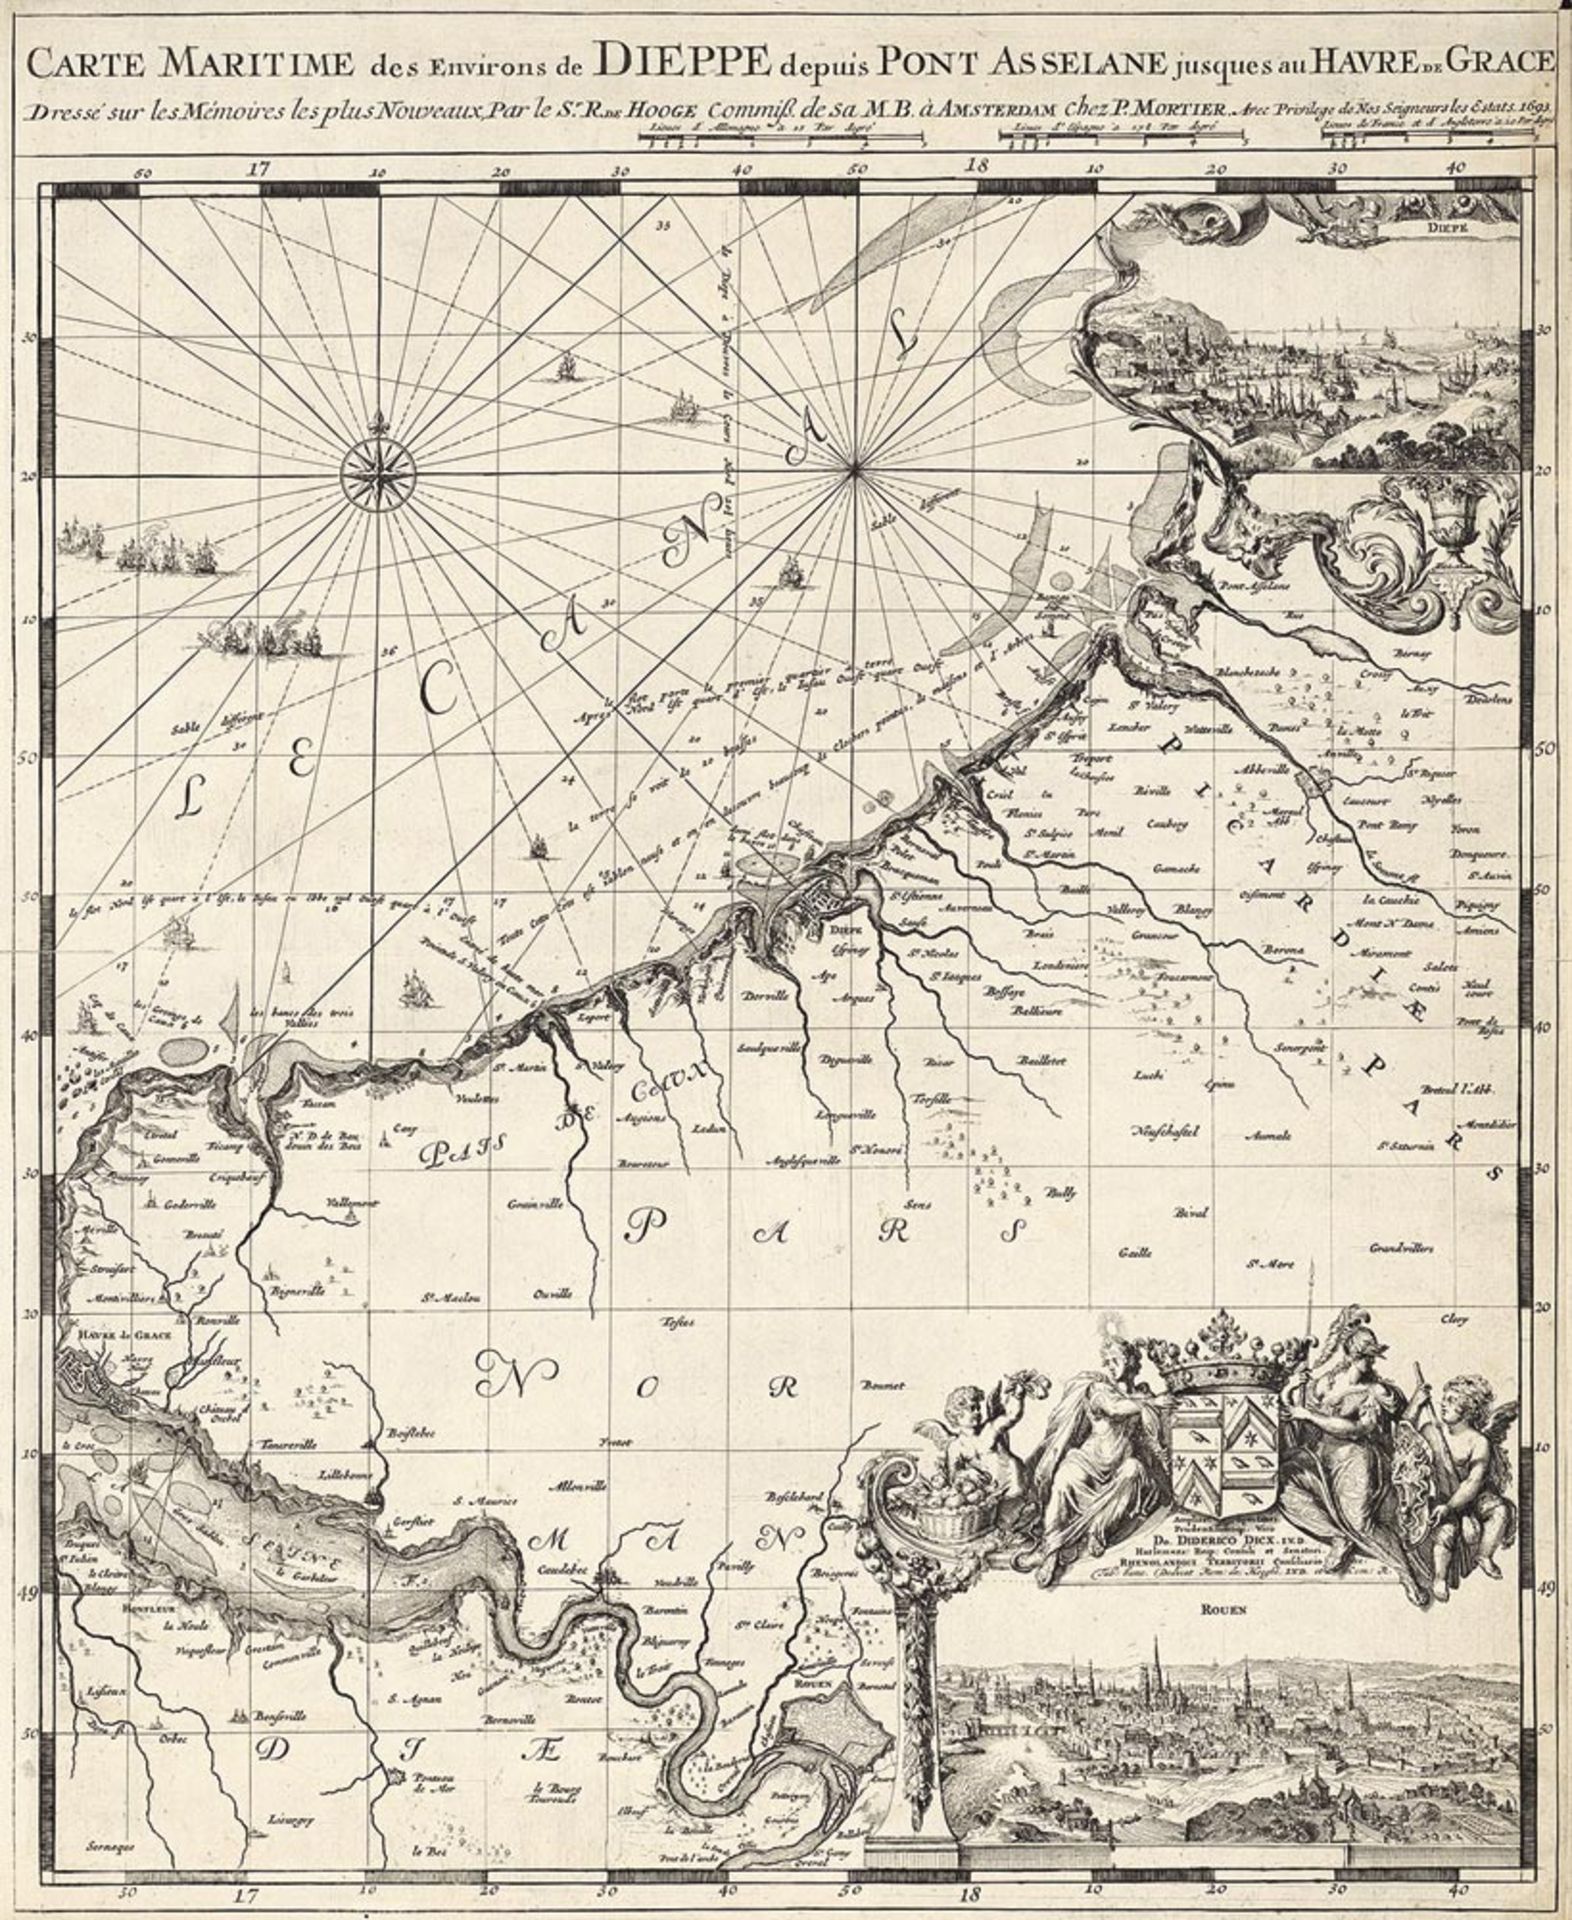 Hooghe, Romein de: Carte Maritime des environs de Dieppe